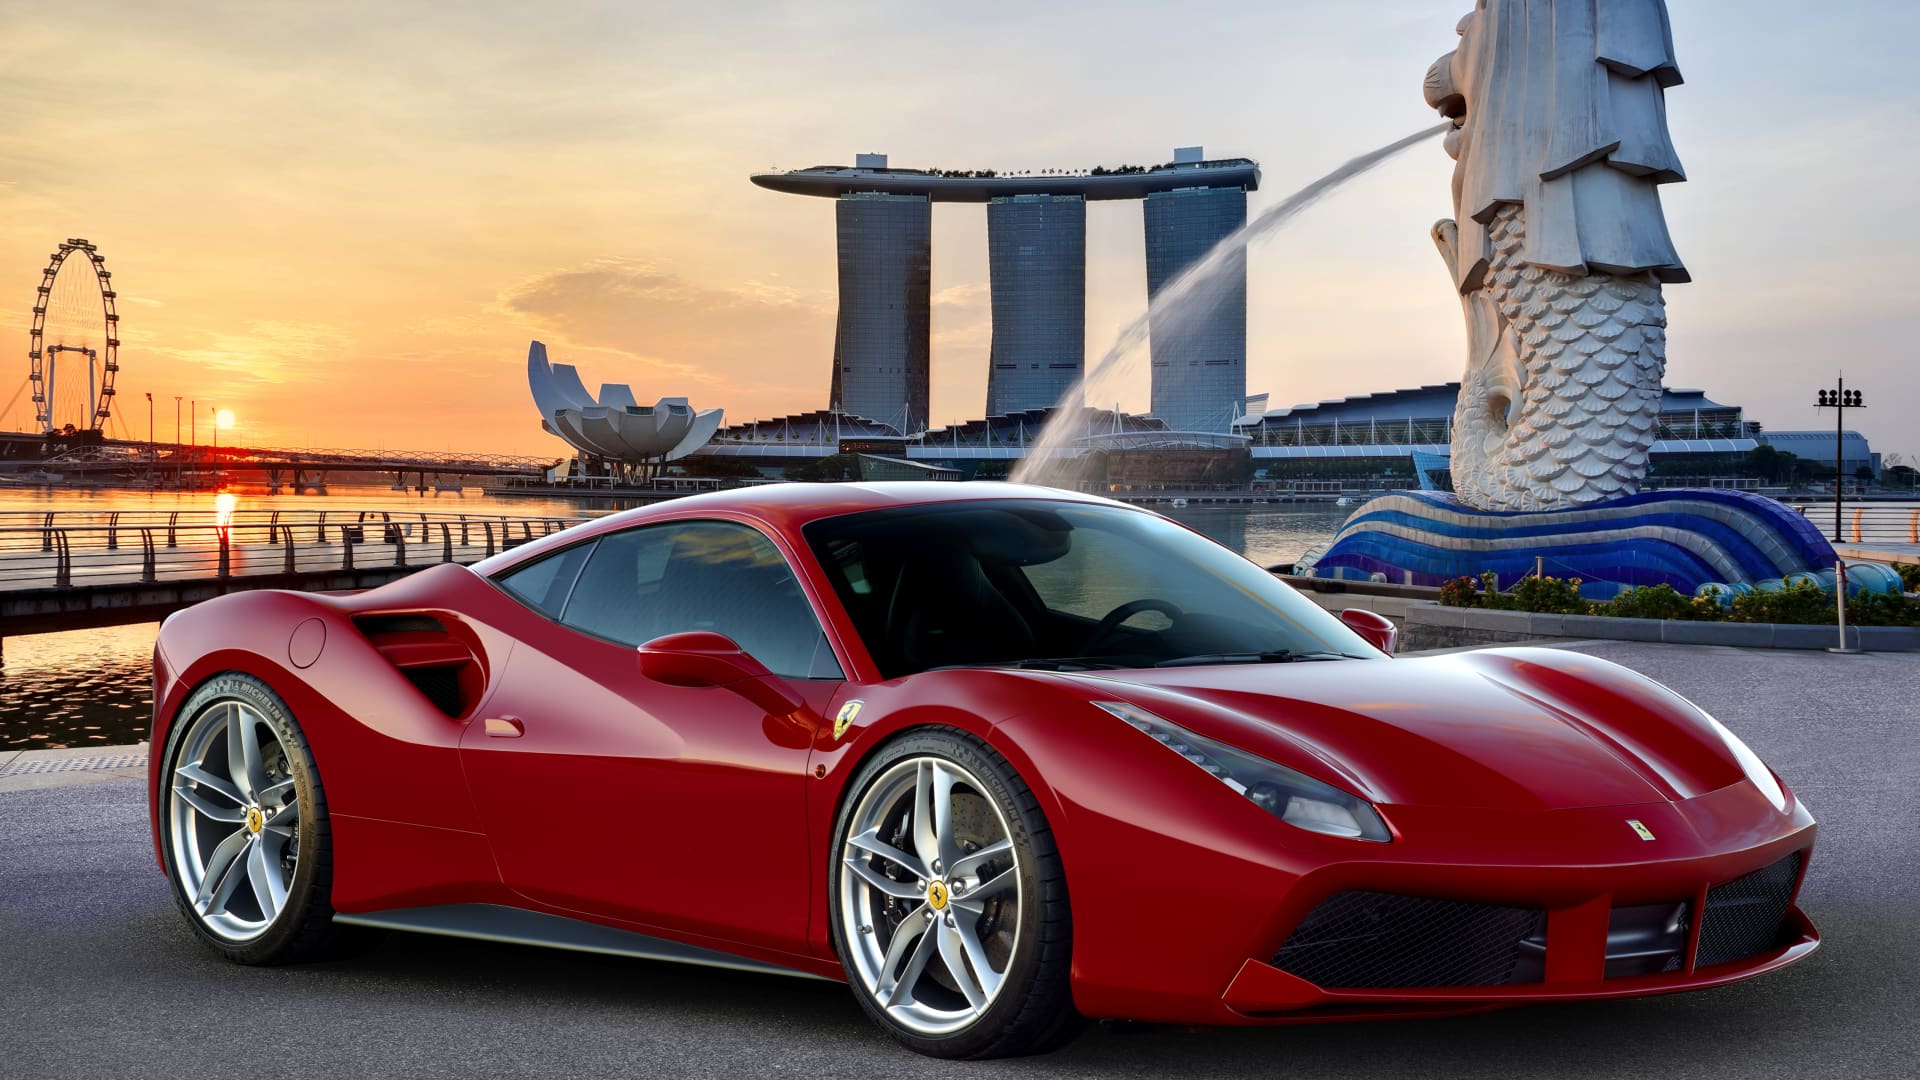 For millionaires only: Ferrari's new supercar hits Singapore roads